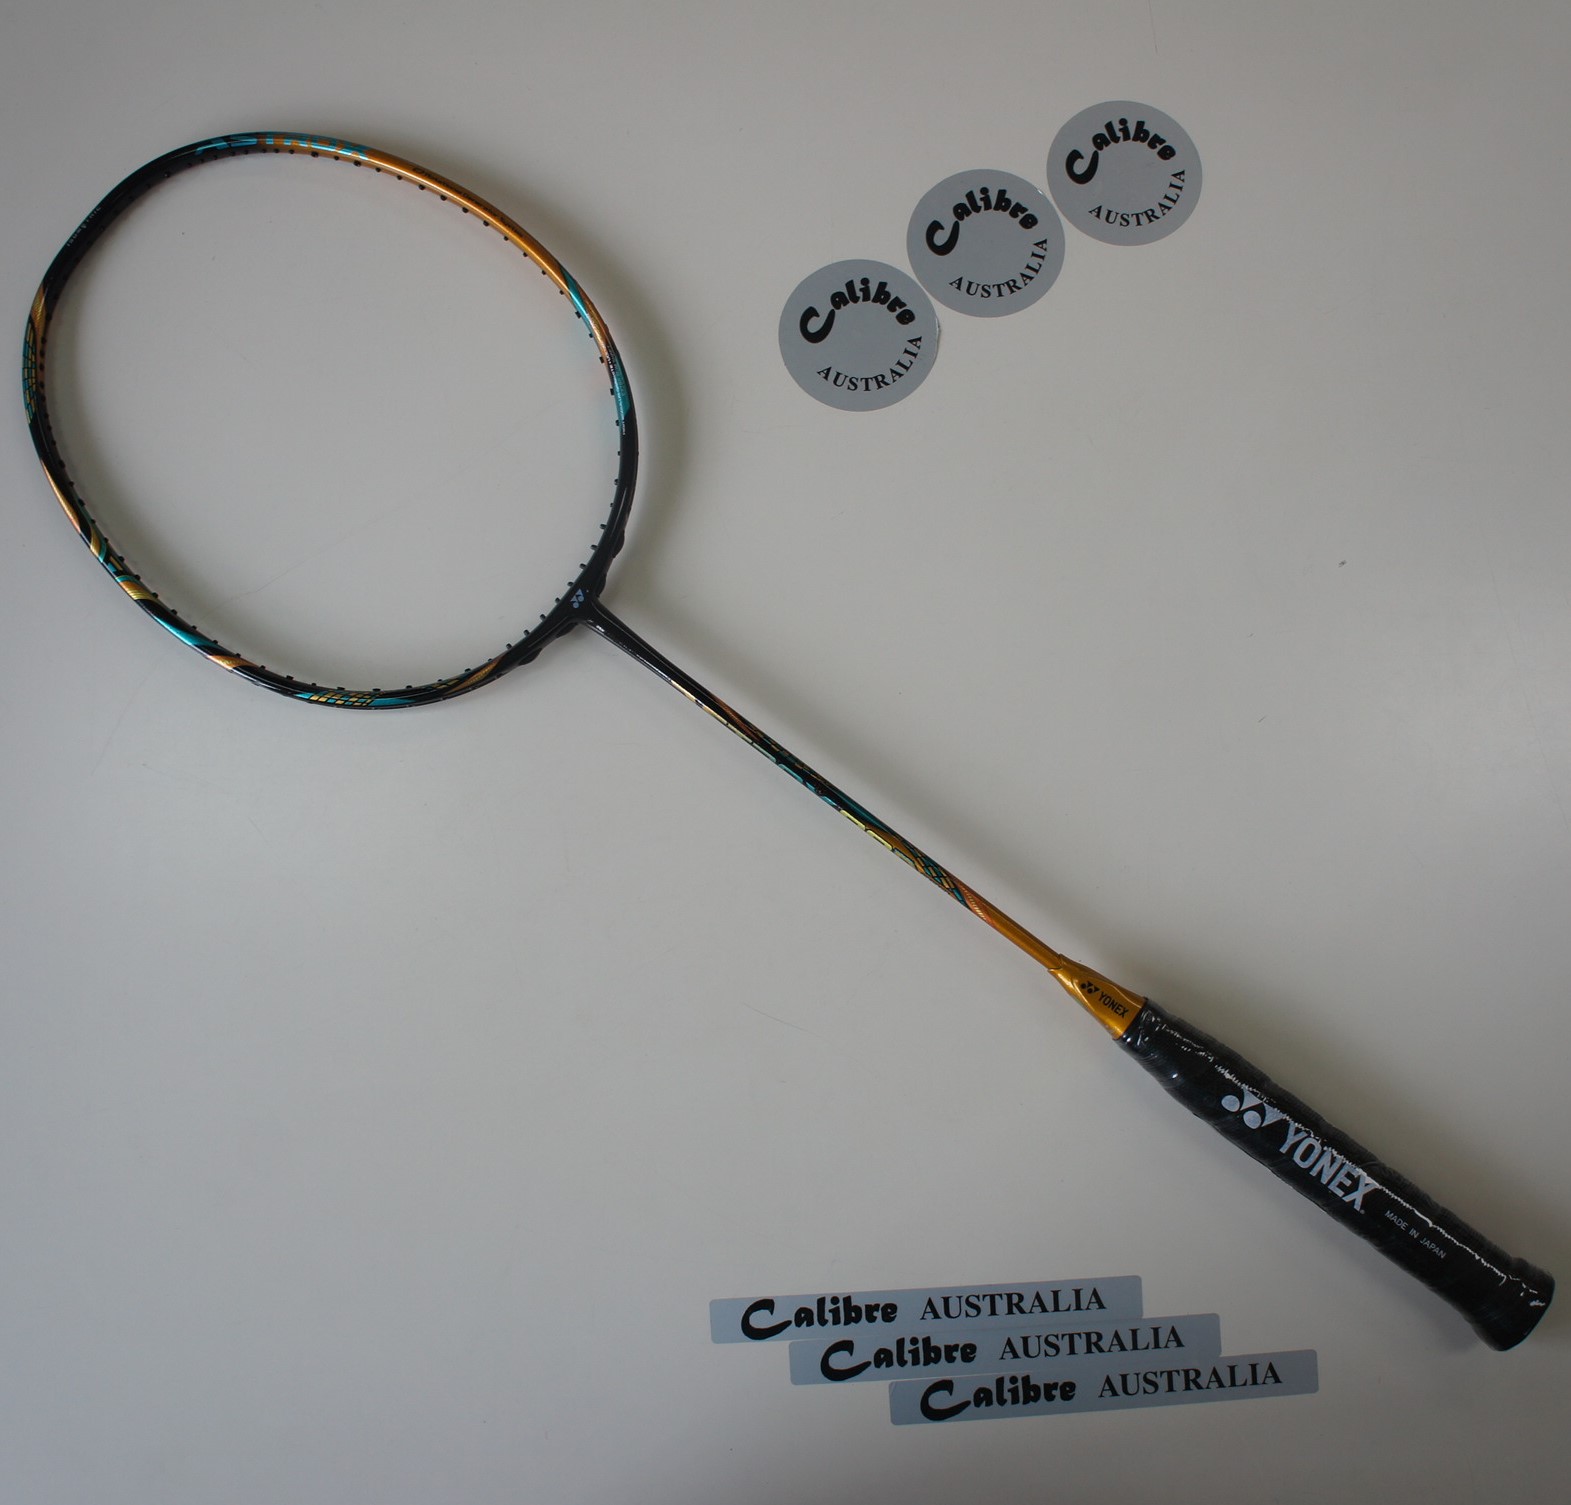 2021 YONEX Astrox 88D Pro Badminton Racquet 3UG5, AX88D Pro